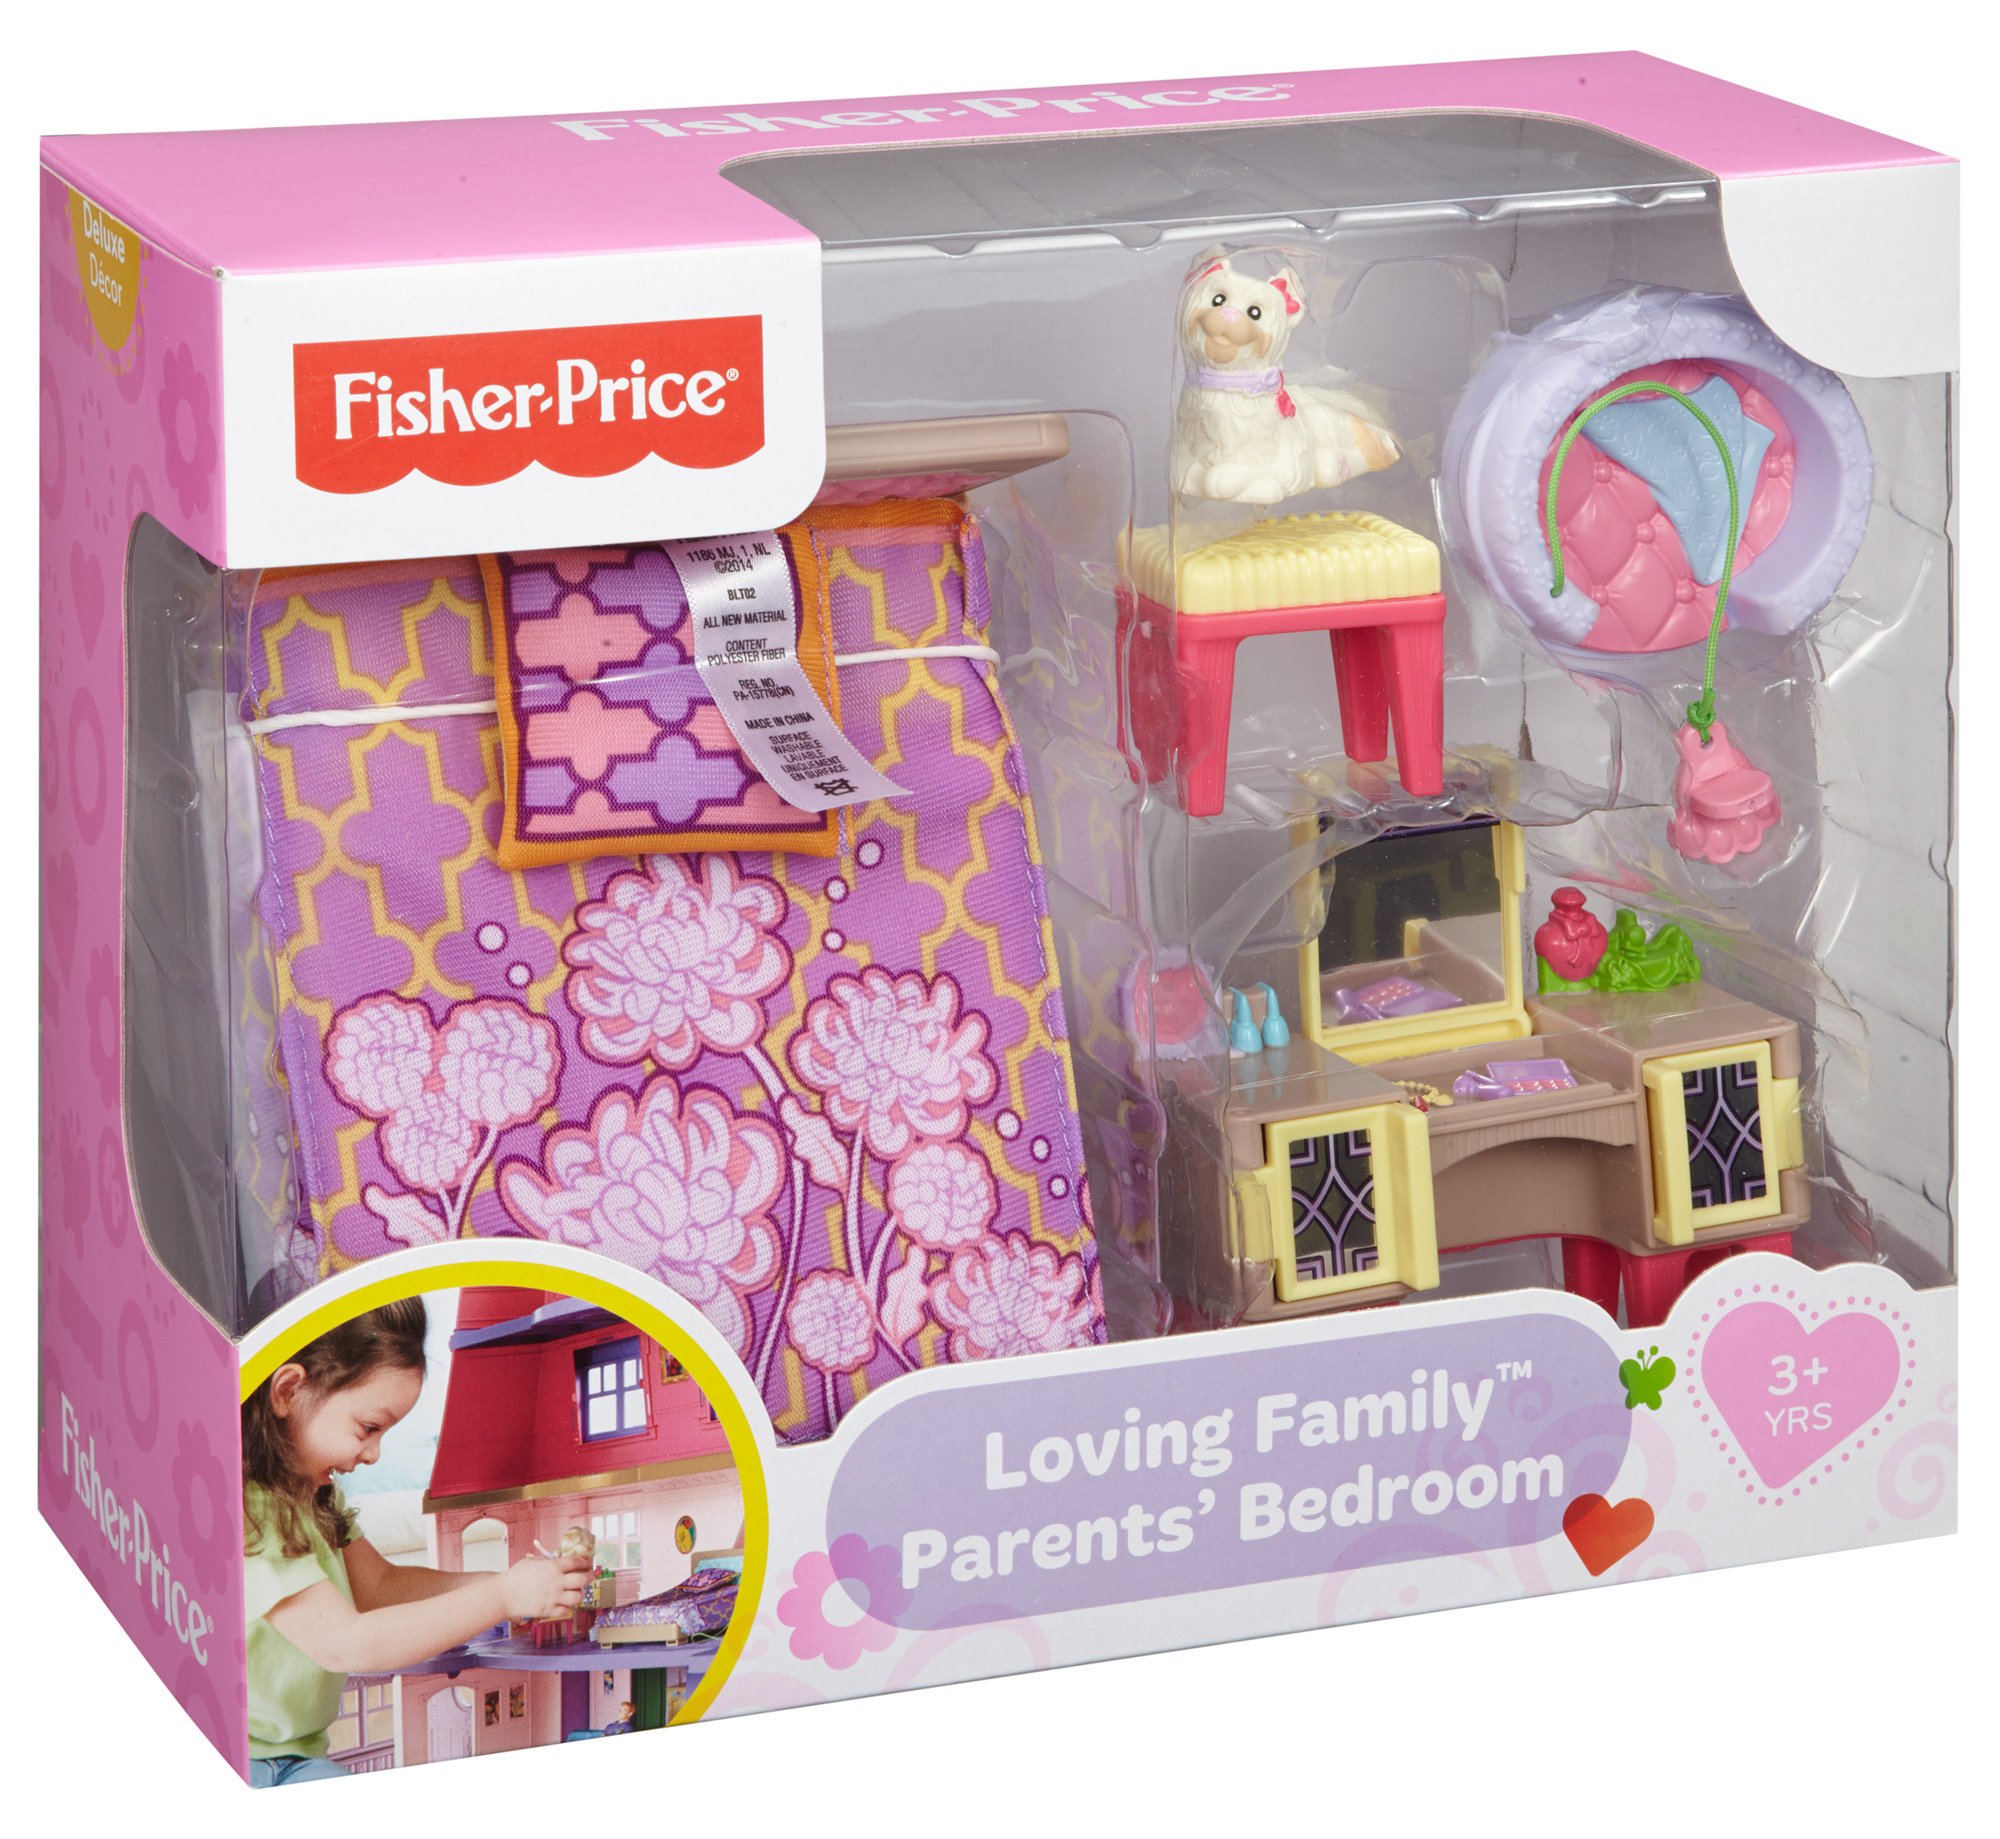 Fisher-Price Loving Family Parents' Bedroom